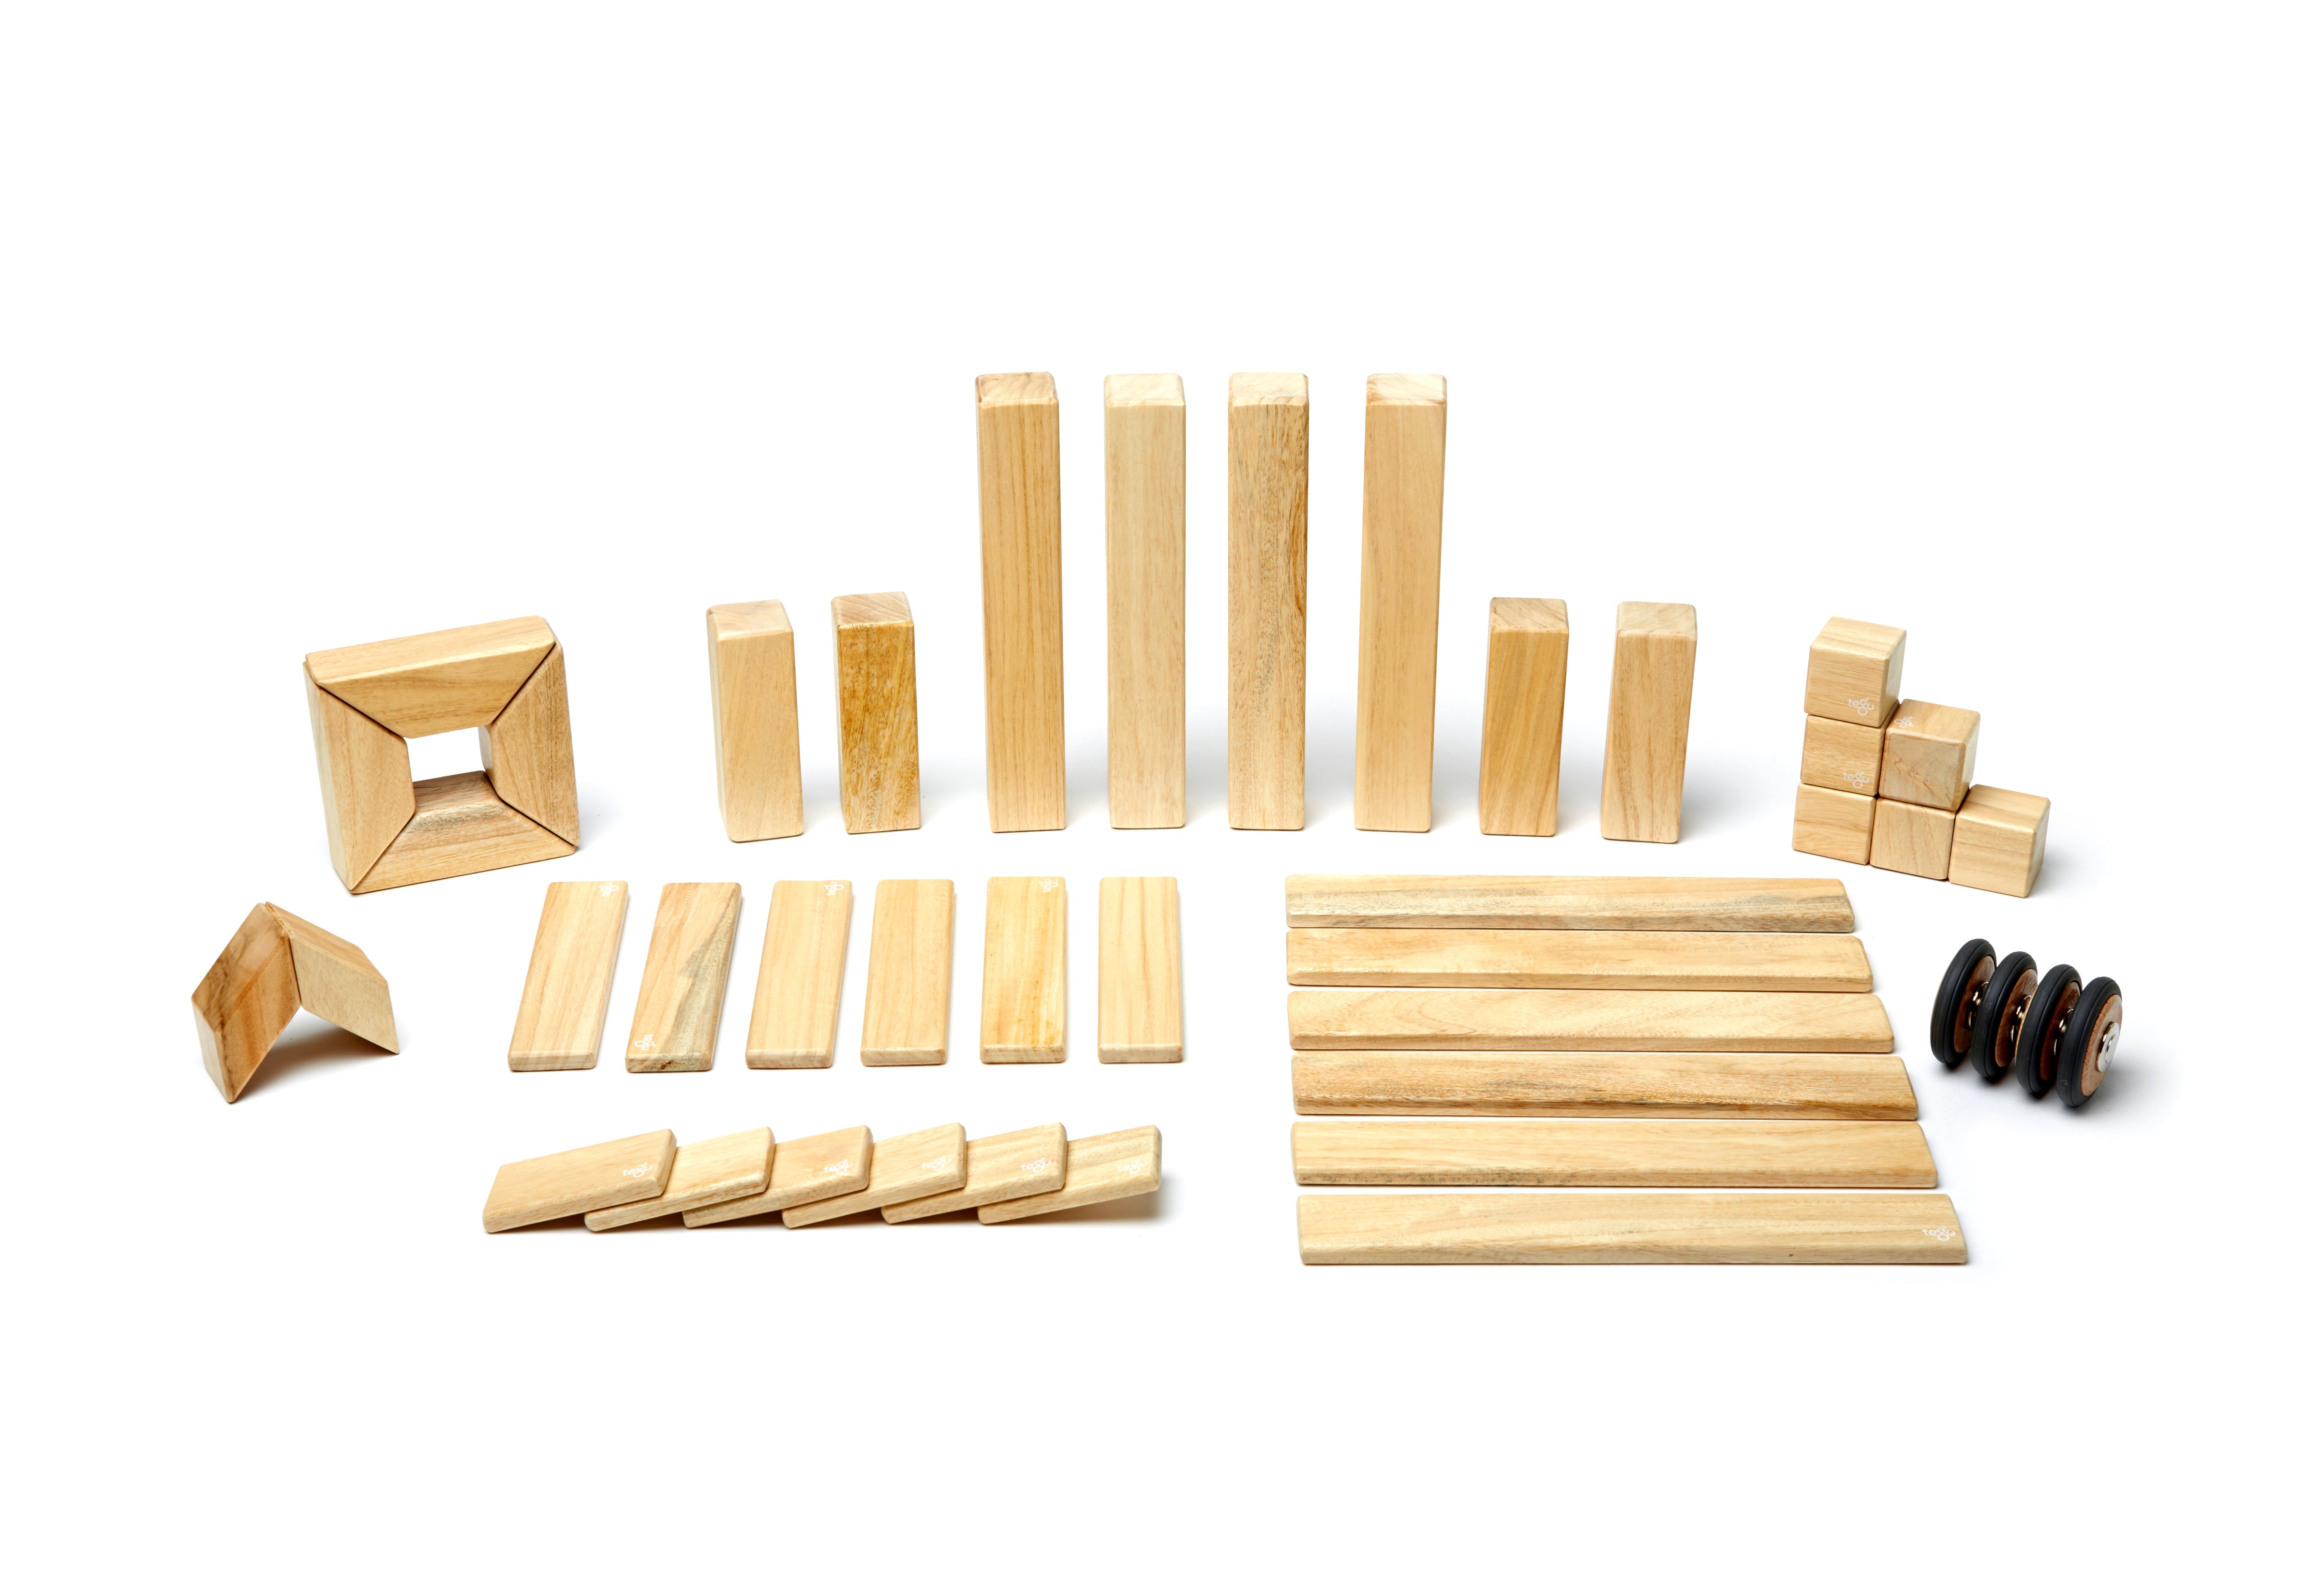 42-Piece Set Magnetic Wooden Blocks Tegu Classics